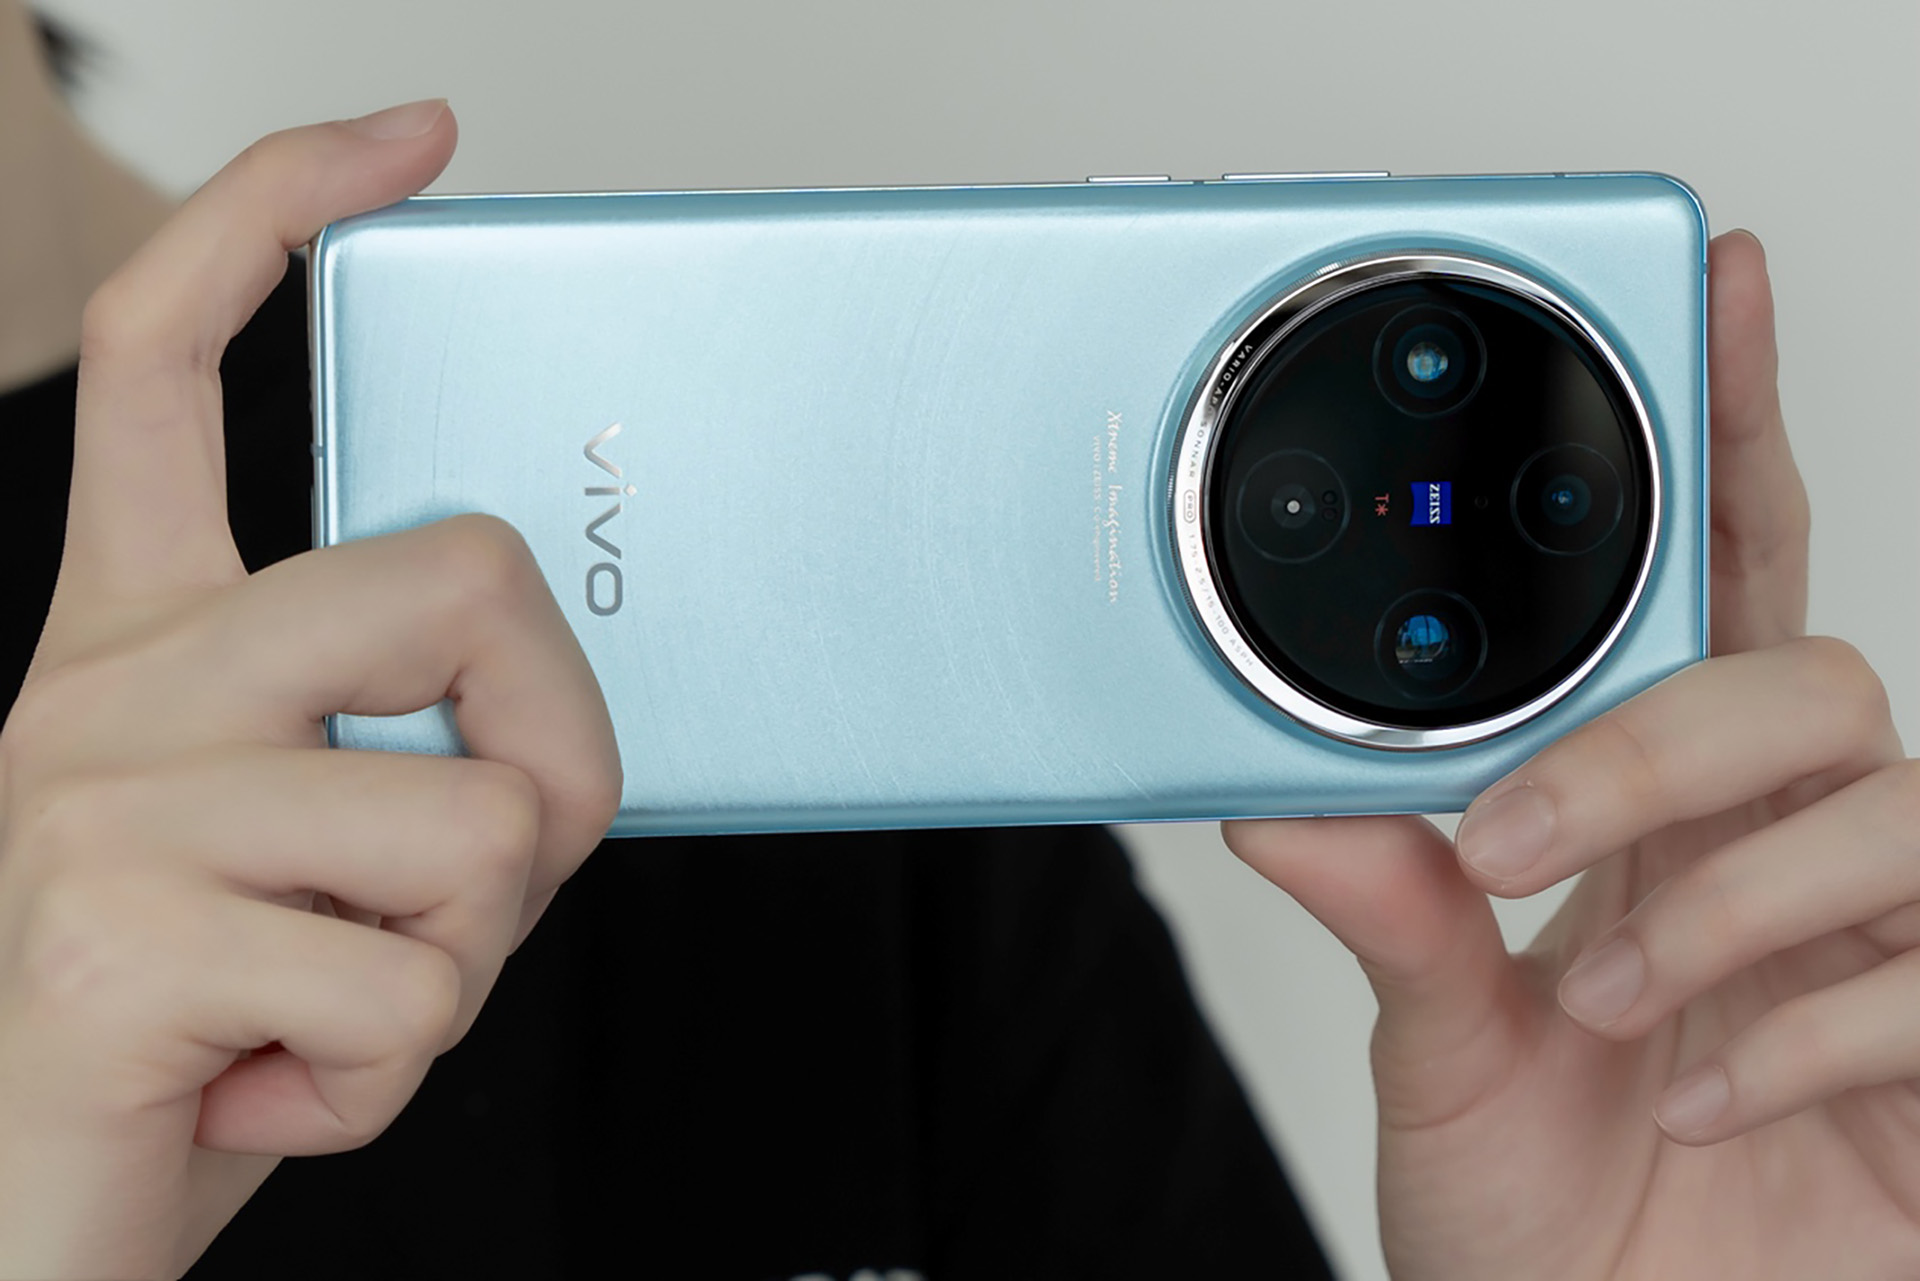 Vivo X100 Pro Review: Camera Monster - Exhibit Tech Review